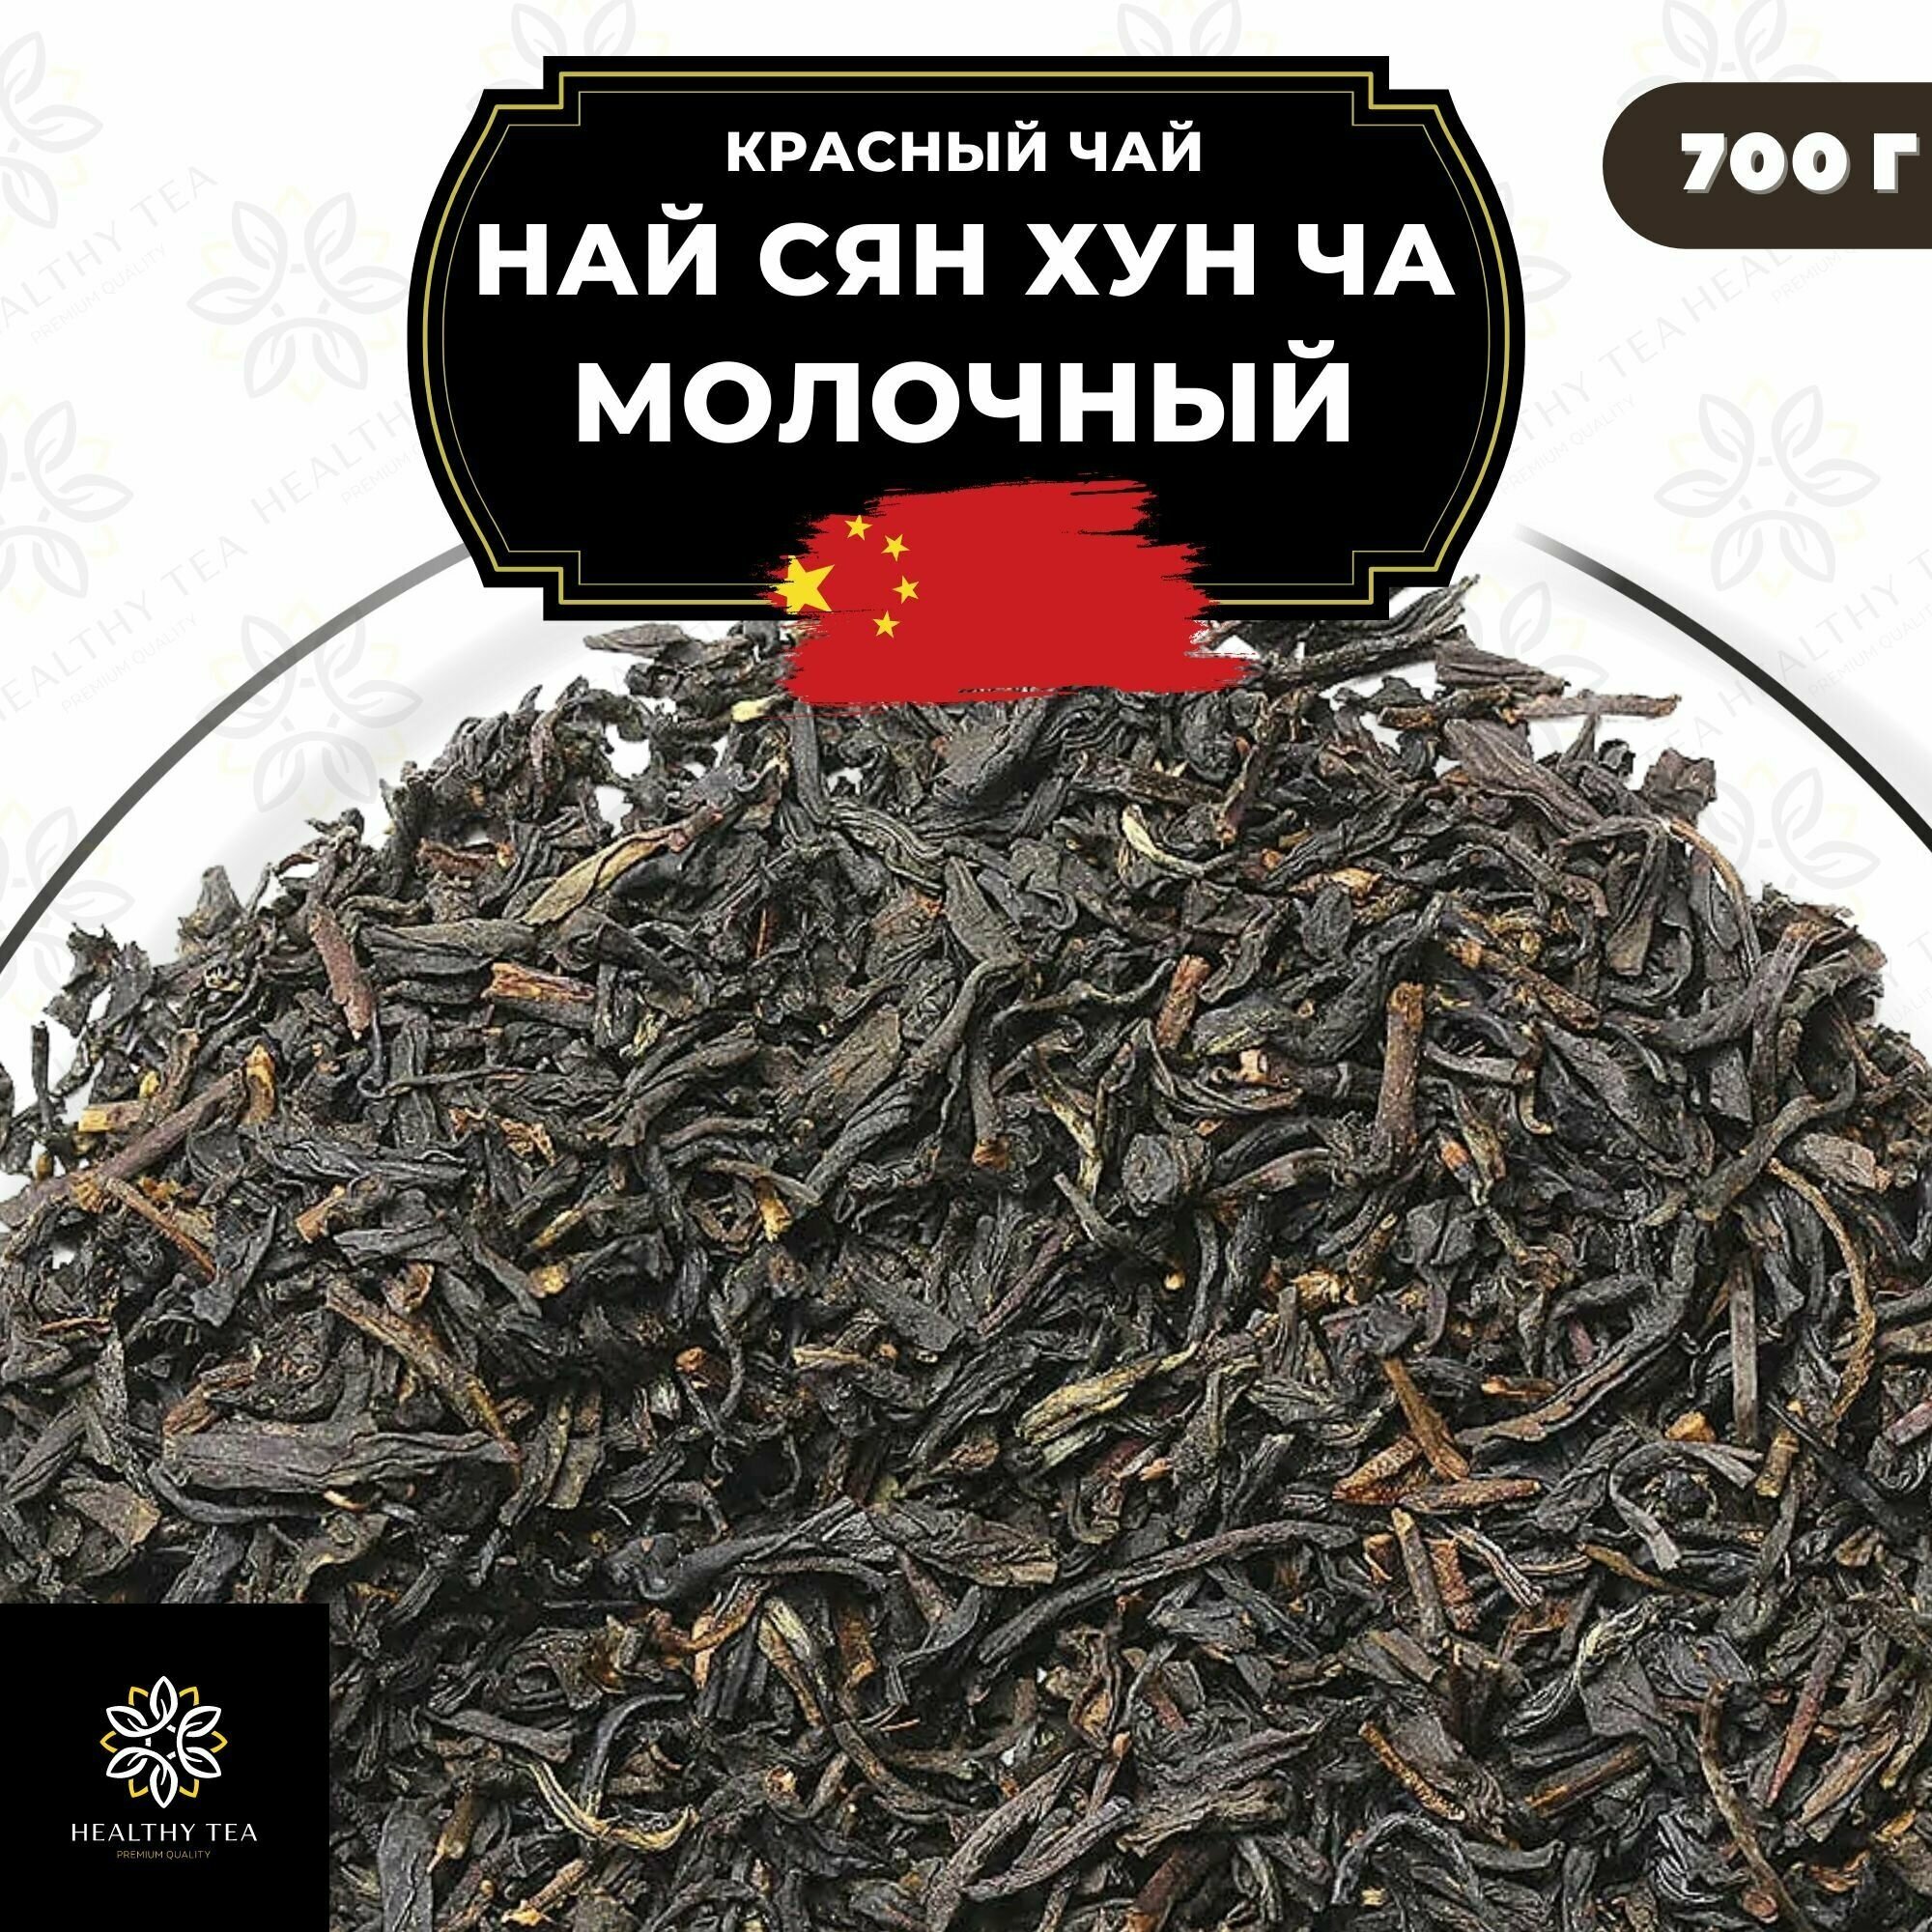 Китайский красный чай Най Сян Хун Ча (Молочный) Полезный чай / HEALTHY TEA, 700 г